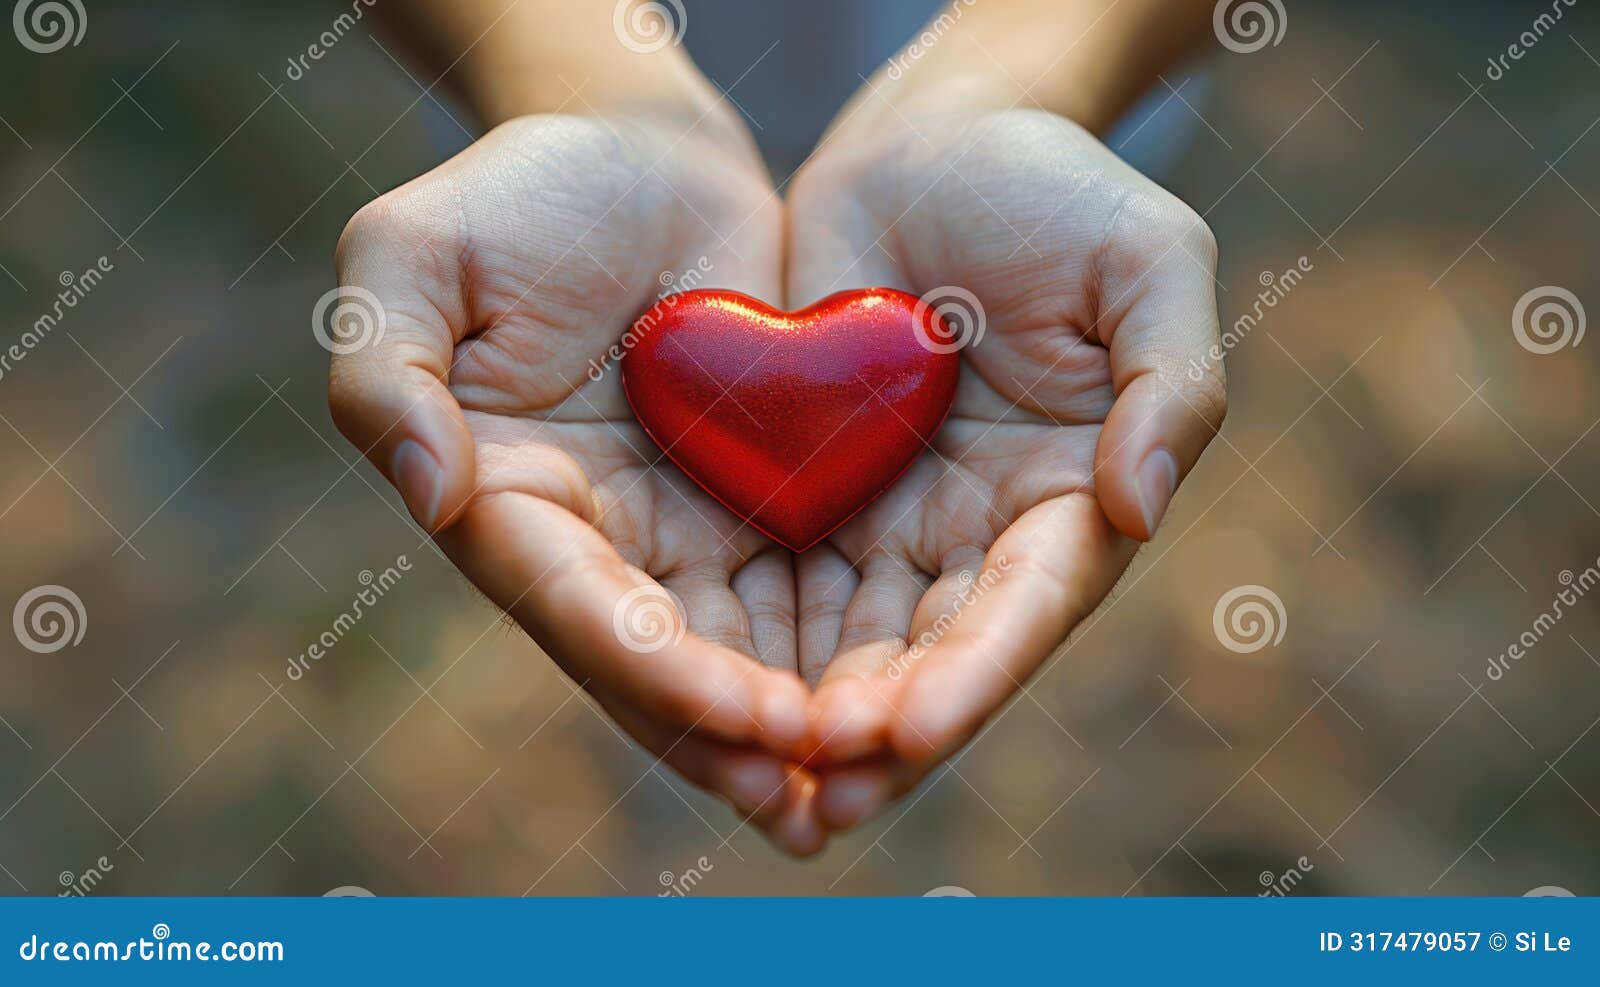 love in hand: a heartfelt donation gesture